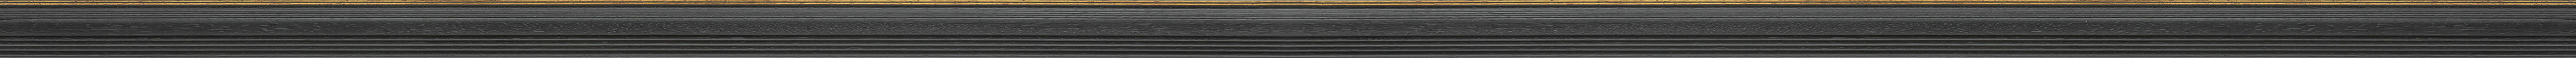 Decape black frame with silver stripe frame